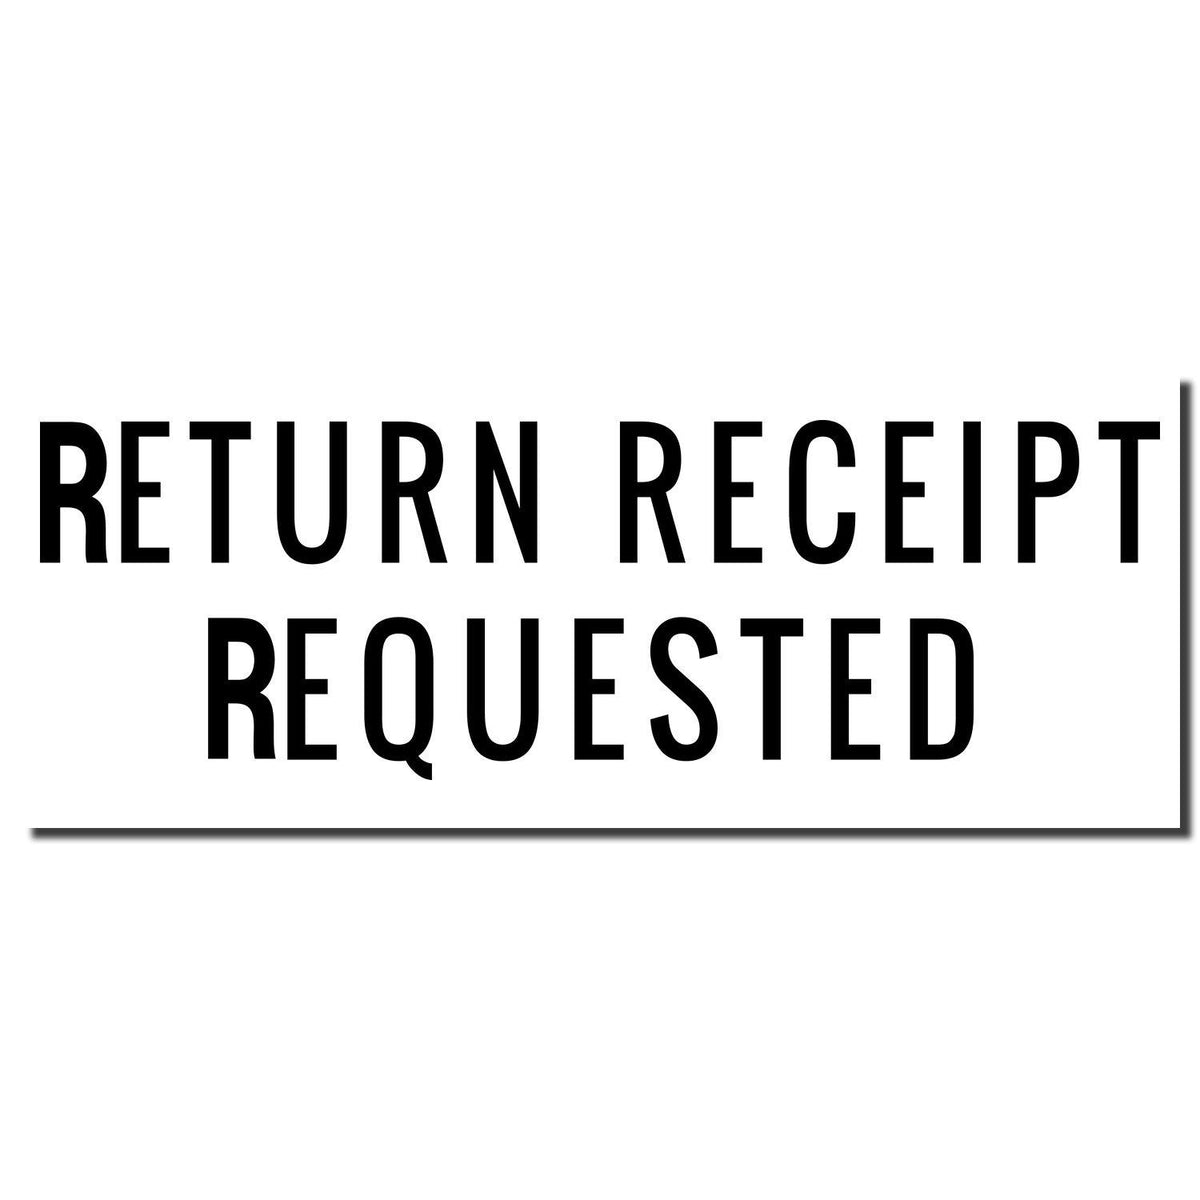 Enlarged Imprint Large Narrow Font Return Receipt Requested Rubber Stamp Sample